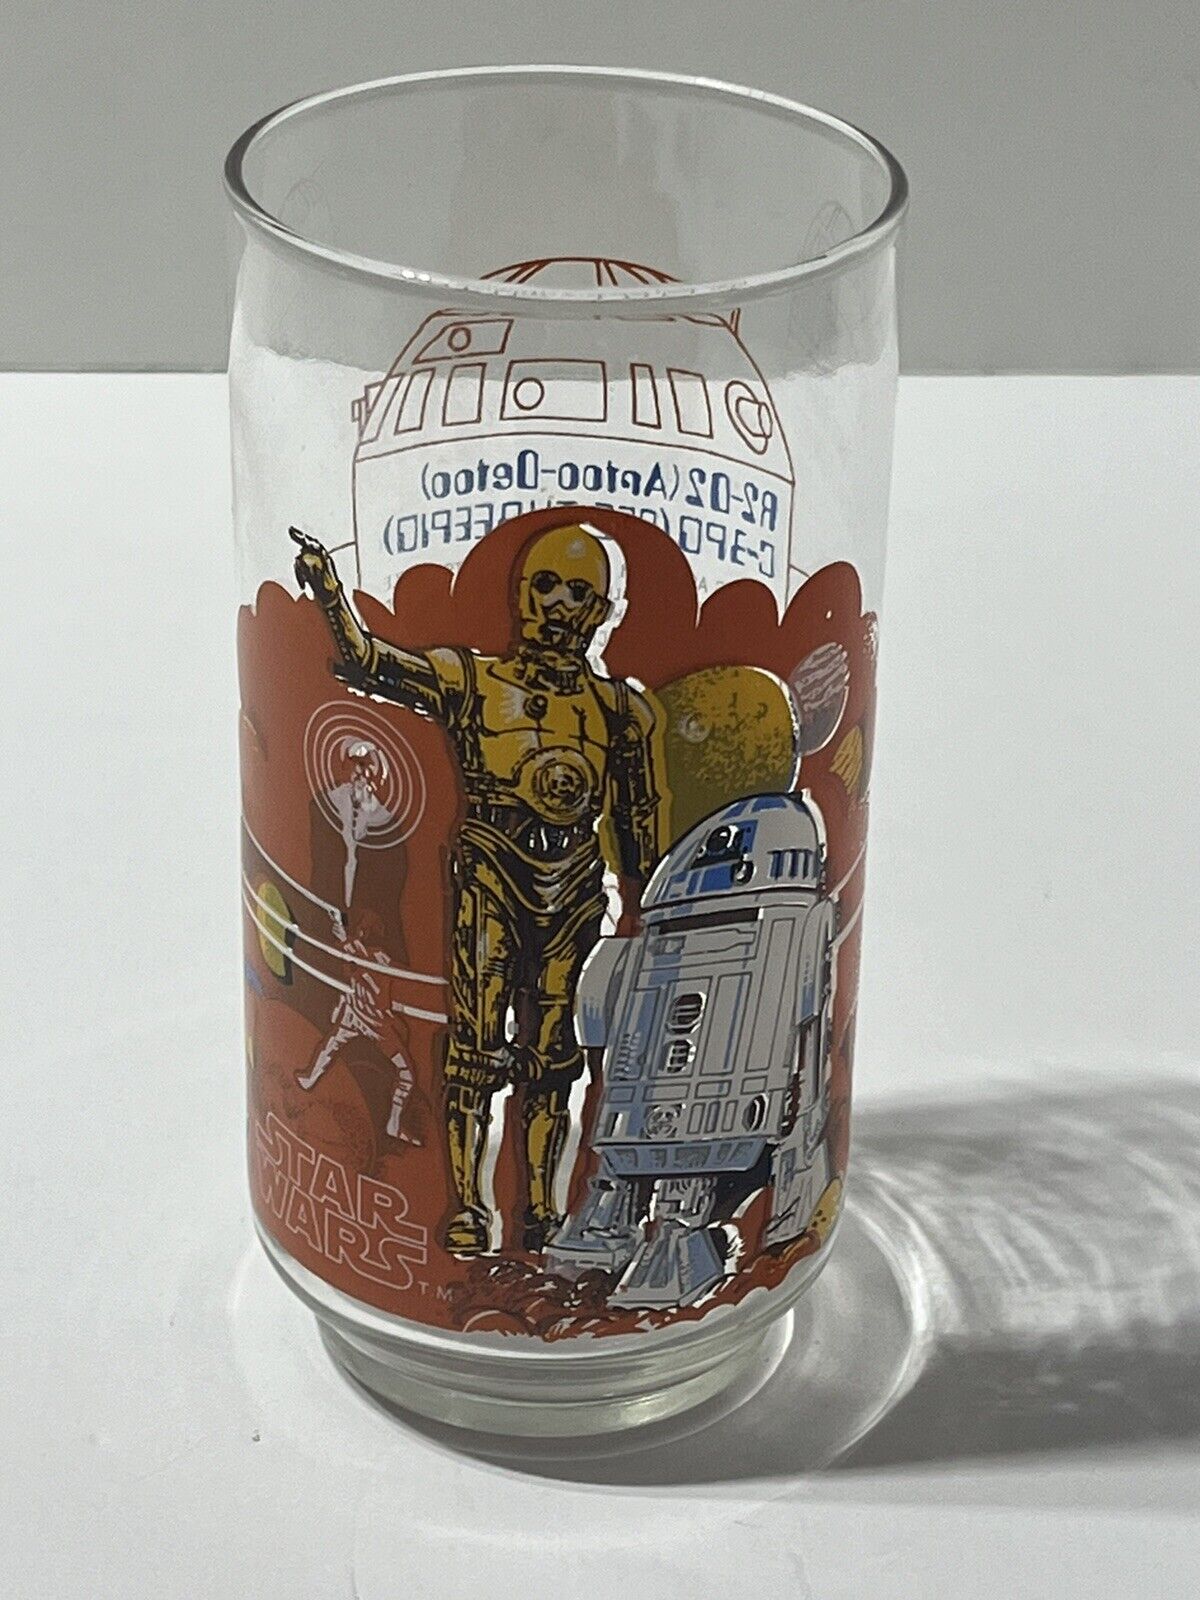 VINTAGE 1977 R2-D2 C-3PO STAR WARS BURGER KING DRINKING GLASS COCA-COLA TUMBLER